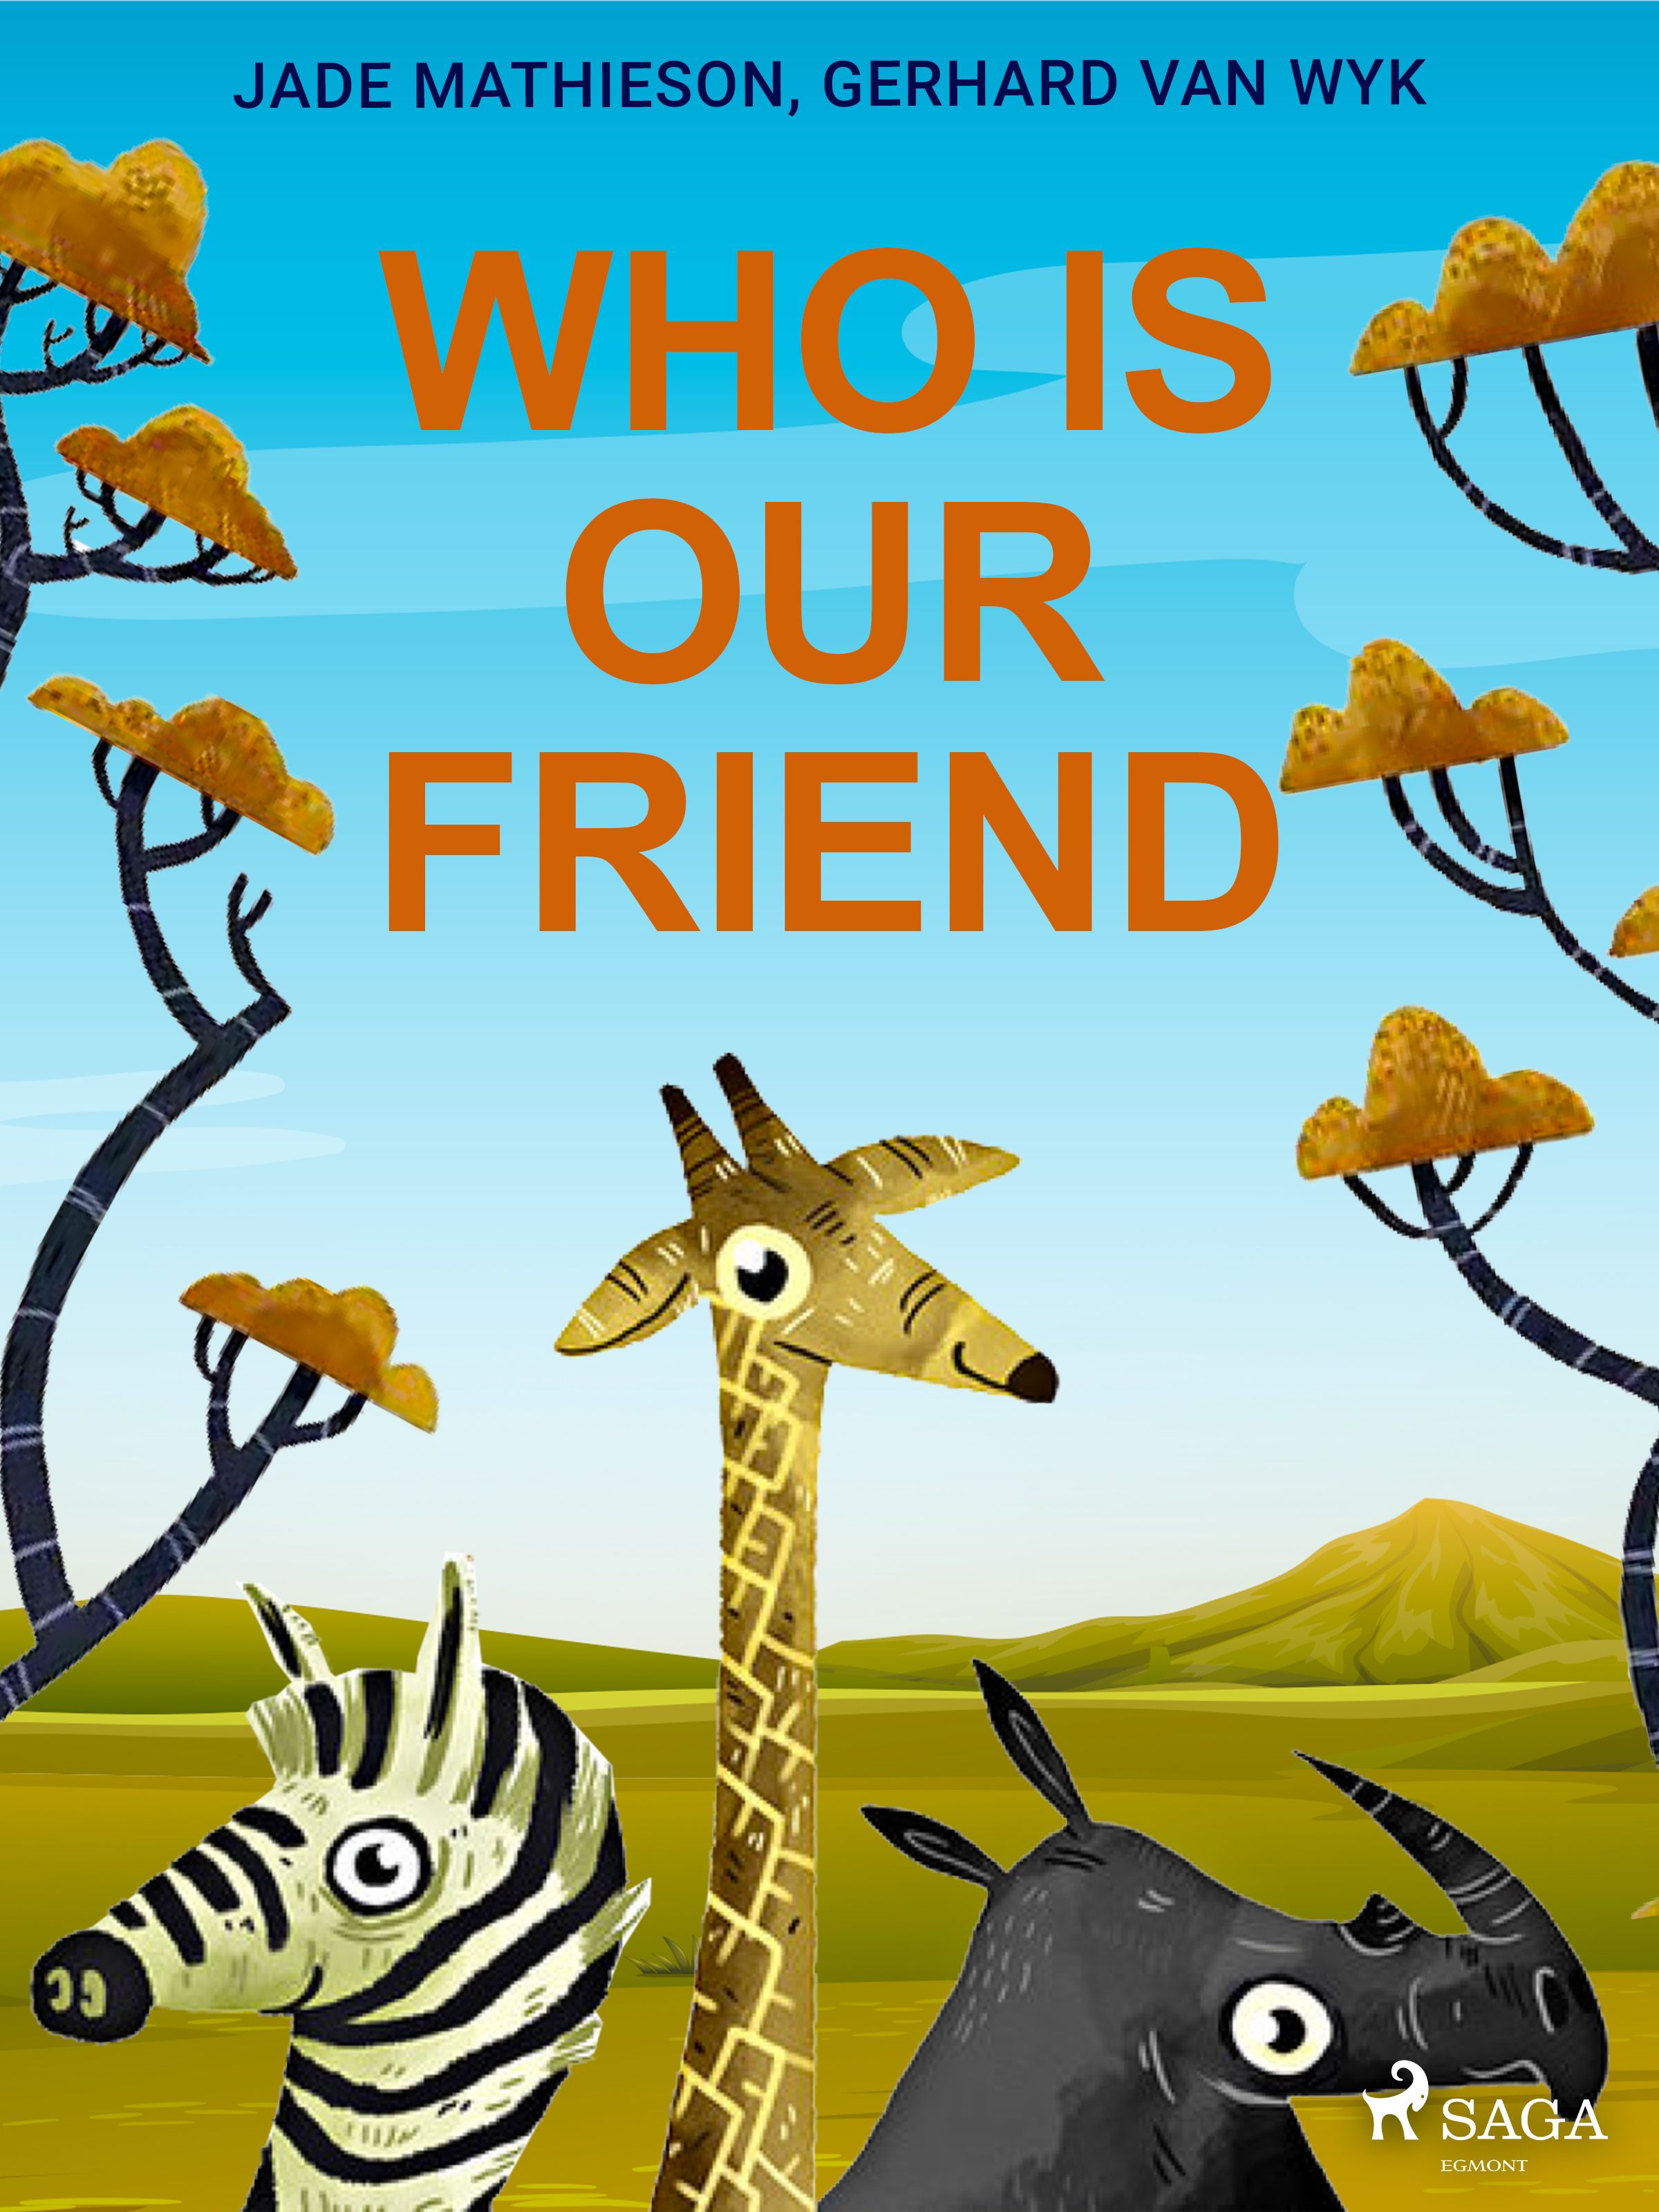 Who is Our Friend, e-bok av Jade Mathieson, Gerhard Van Wyk